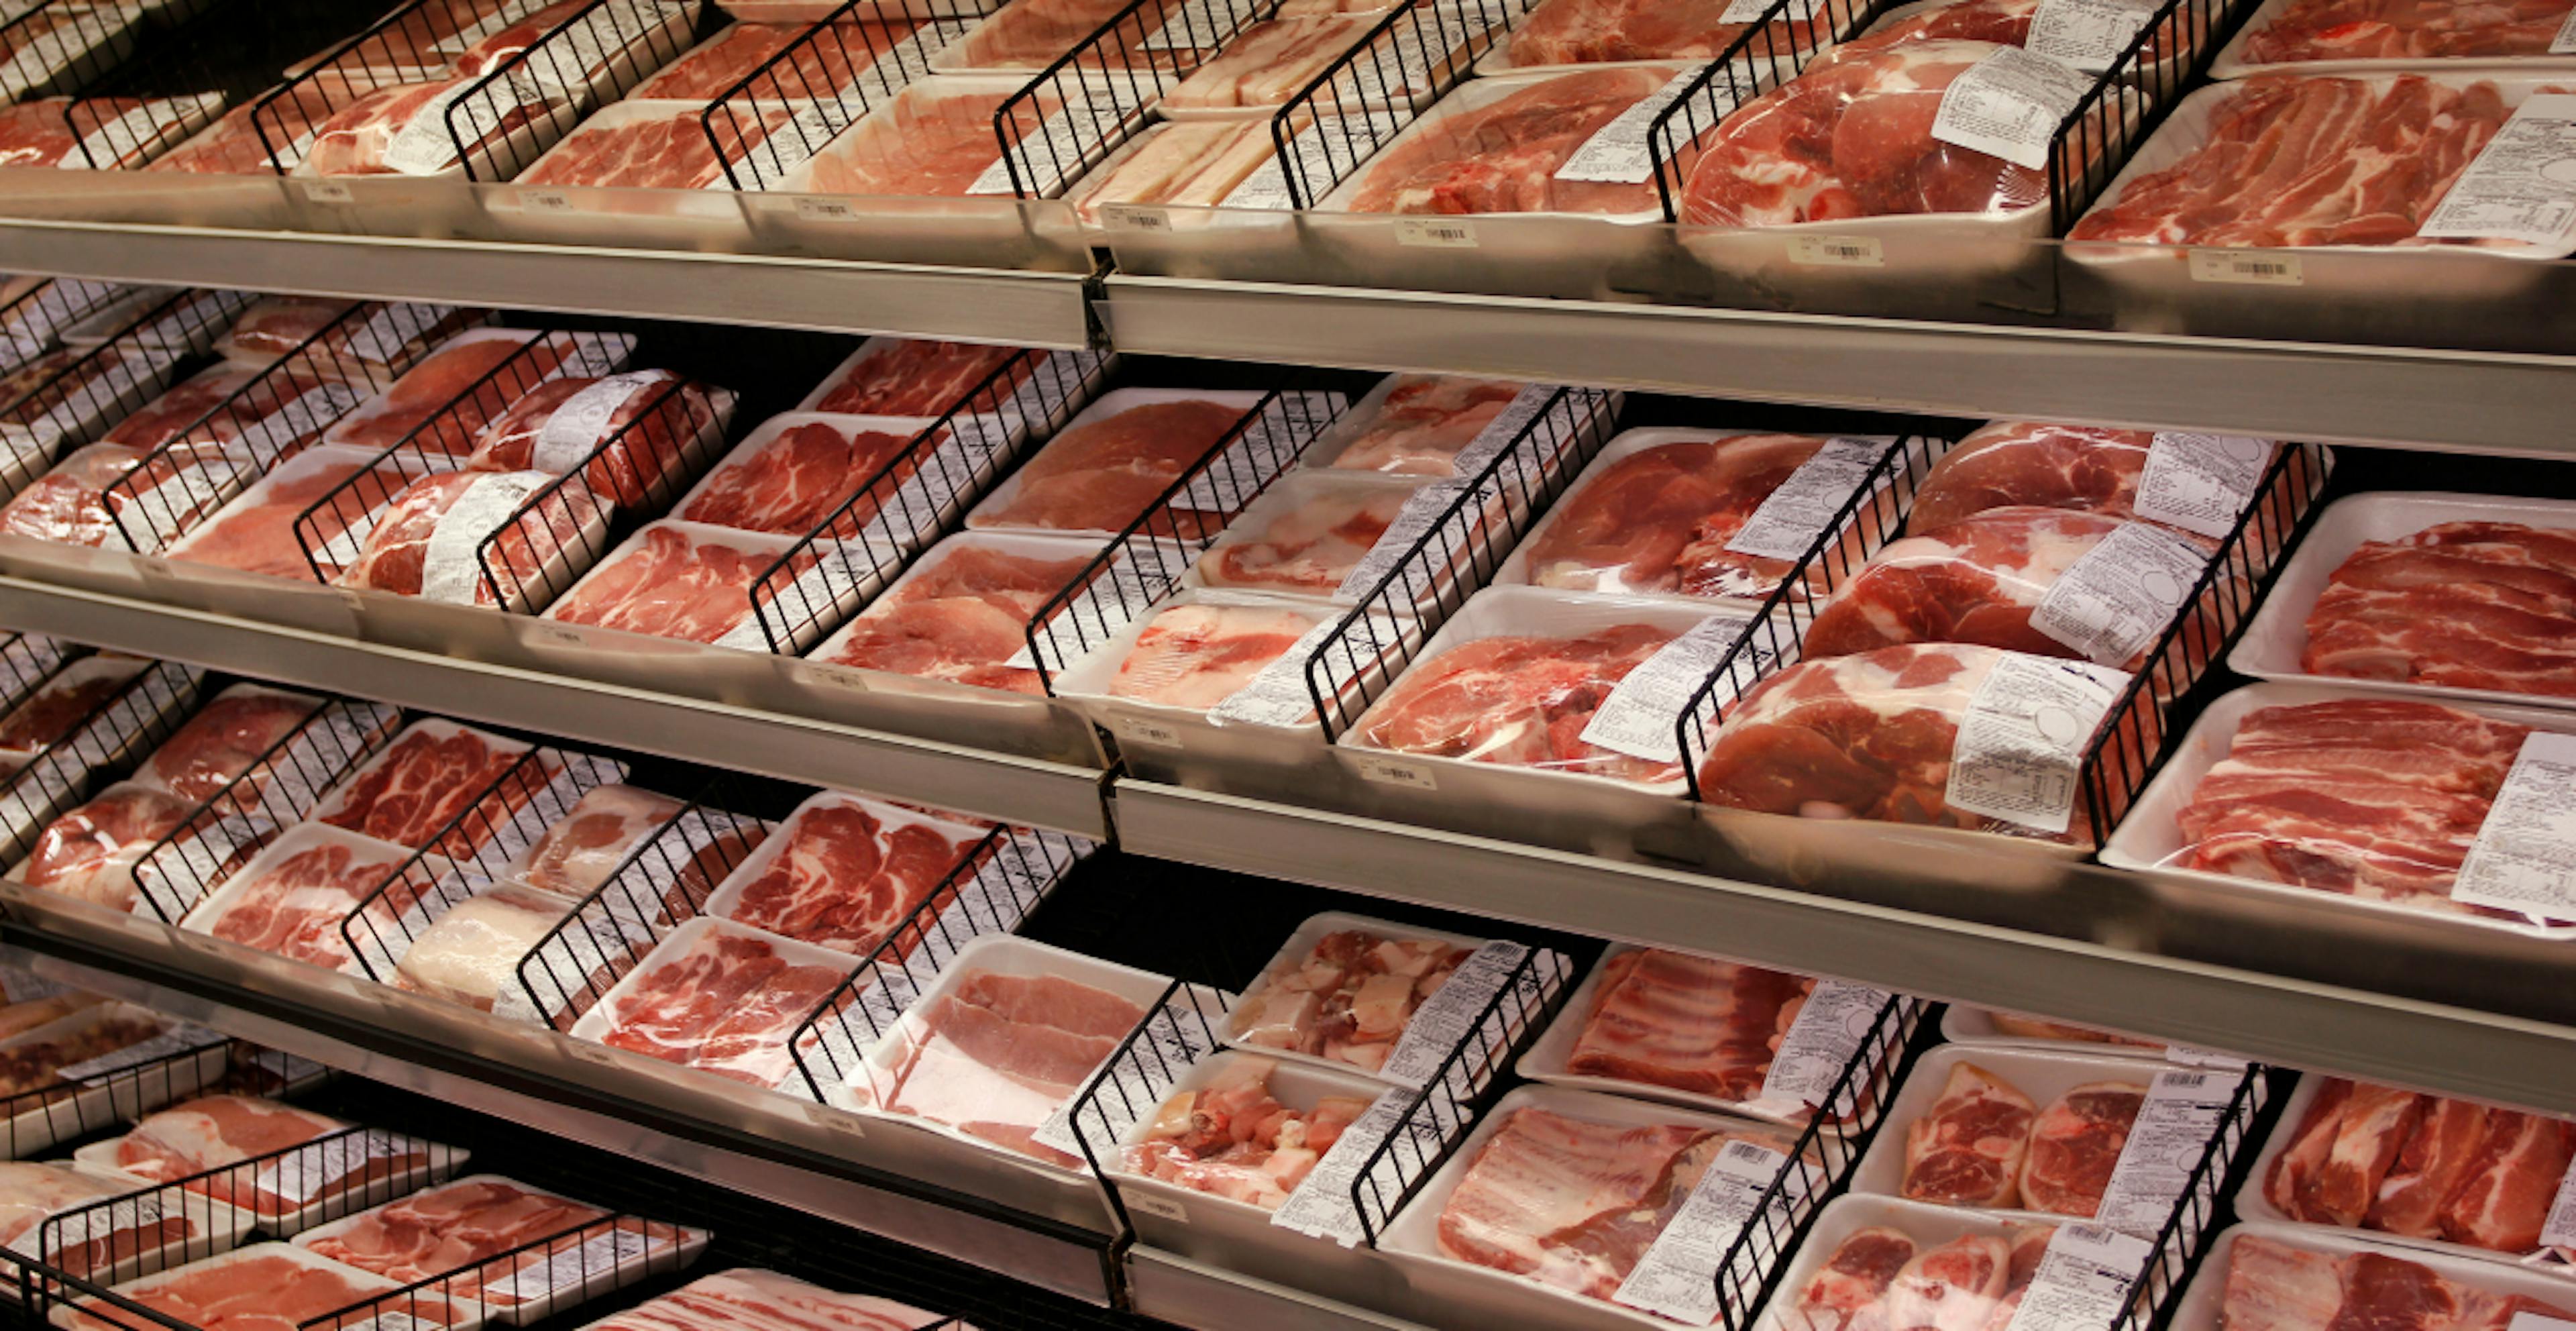 Meat in supermarket shelf supermarket